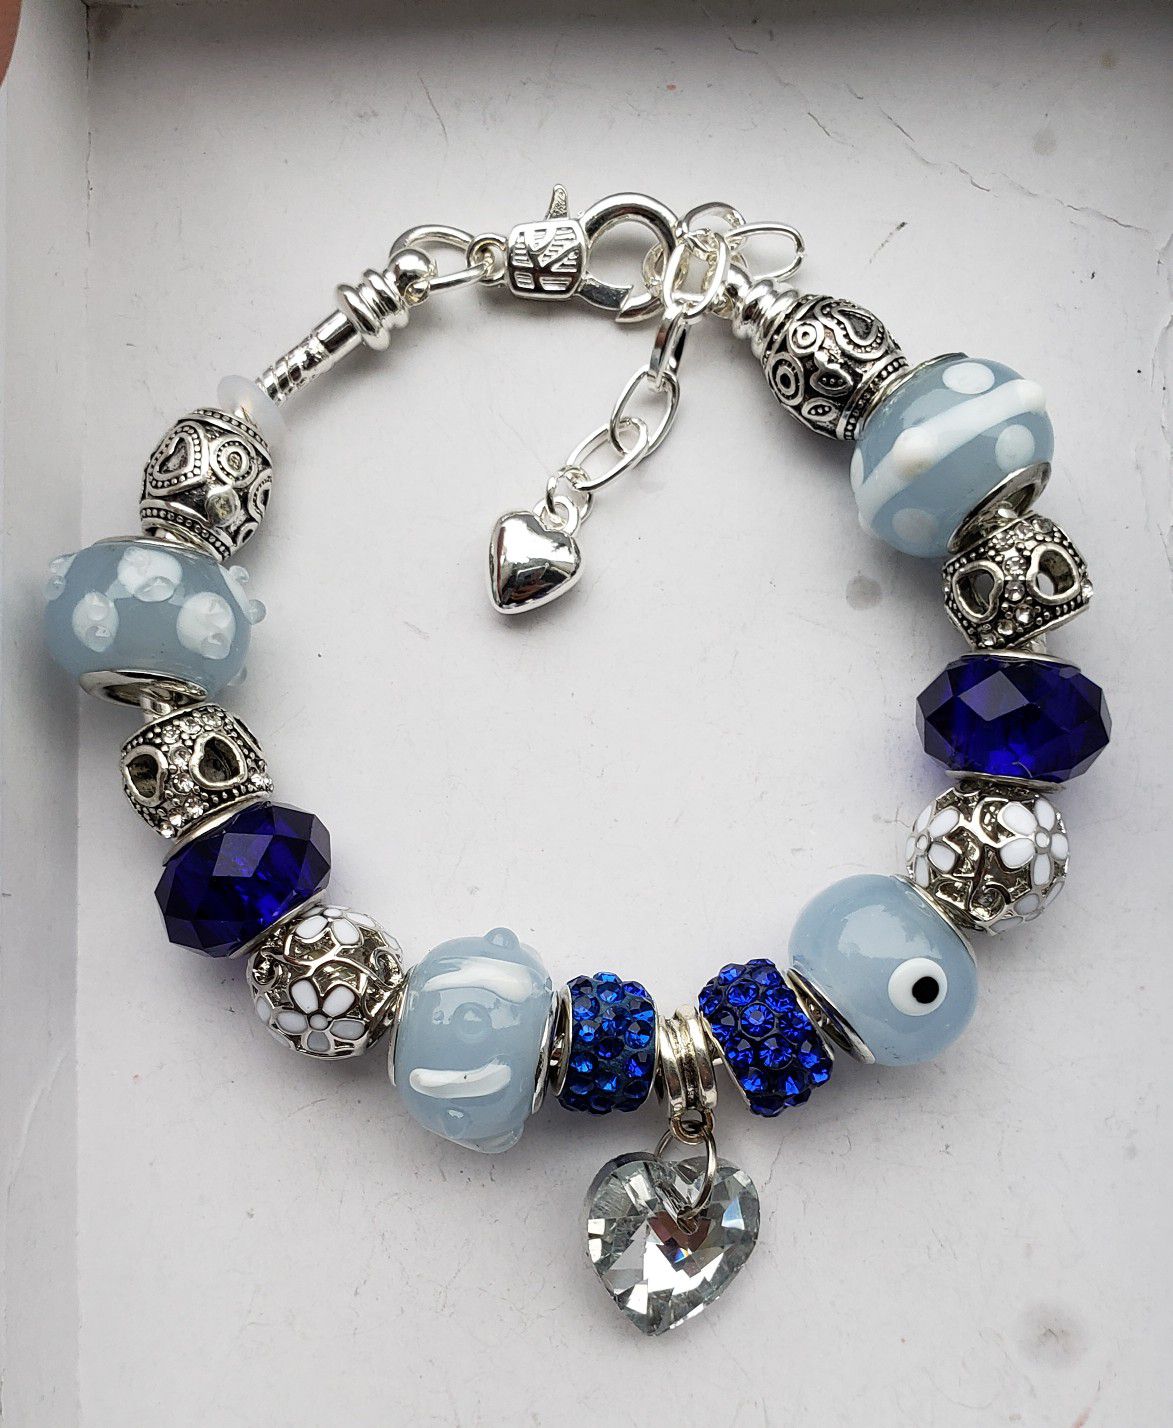 Pale blue and whitecharm bead bracelet 2 for $25